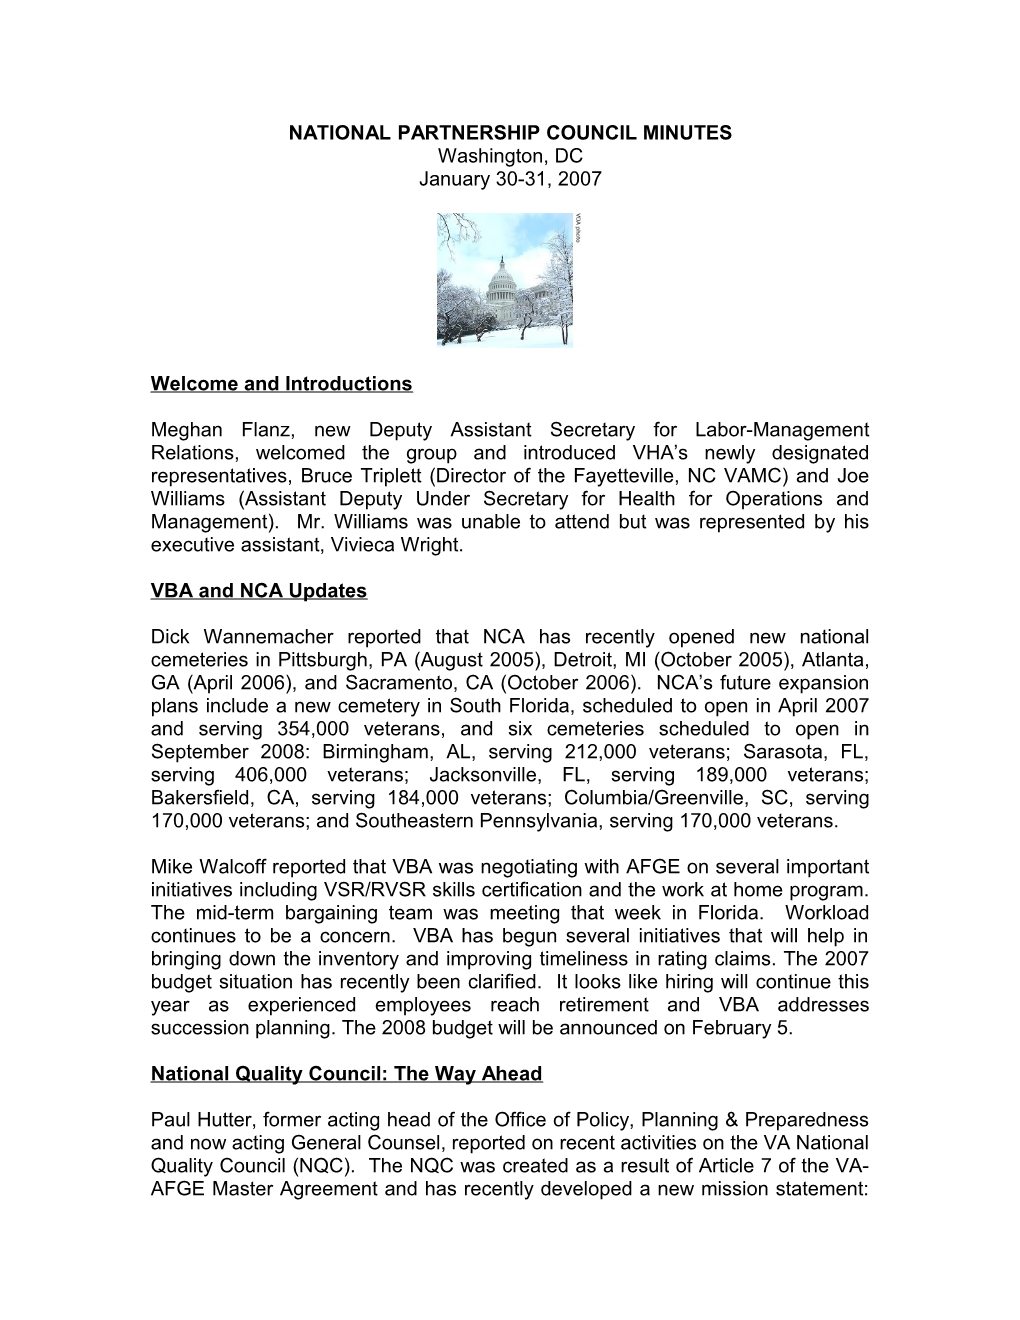 National Partnership Council Minutes